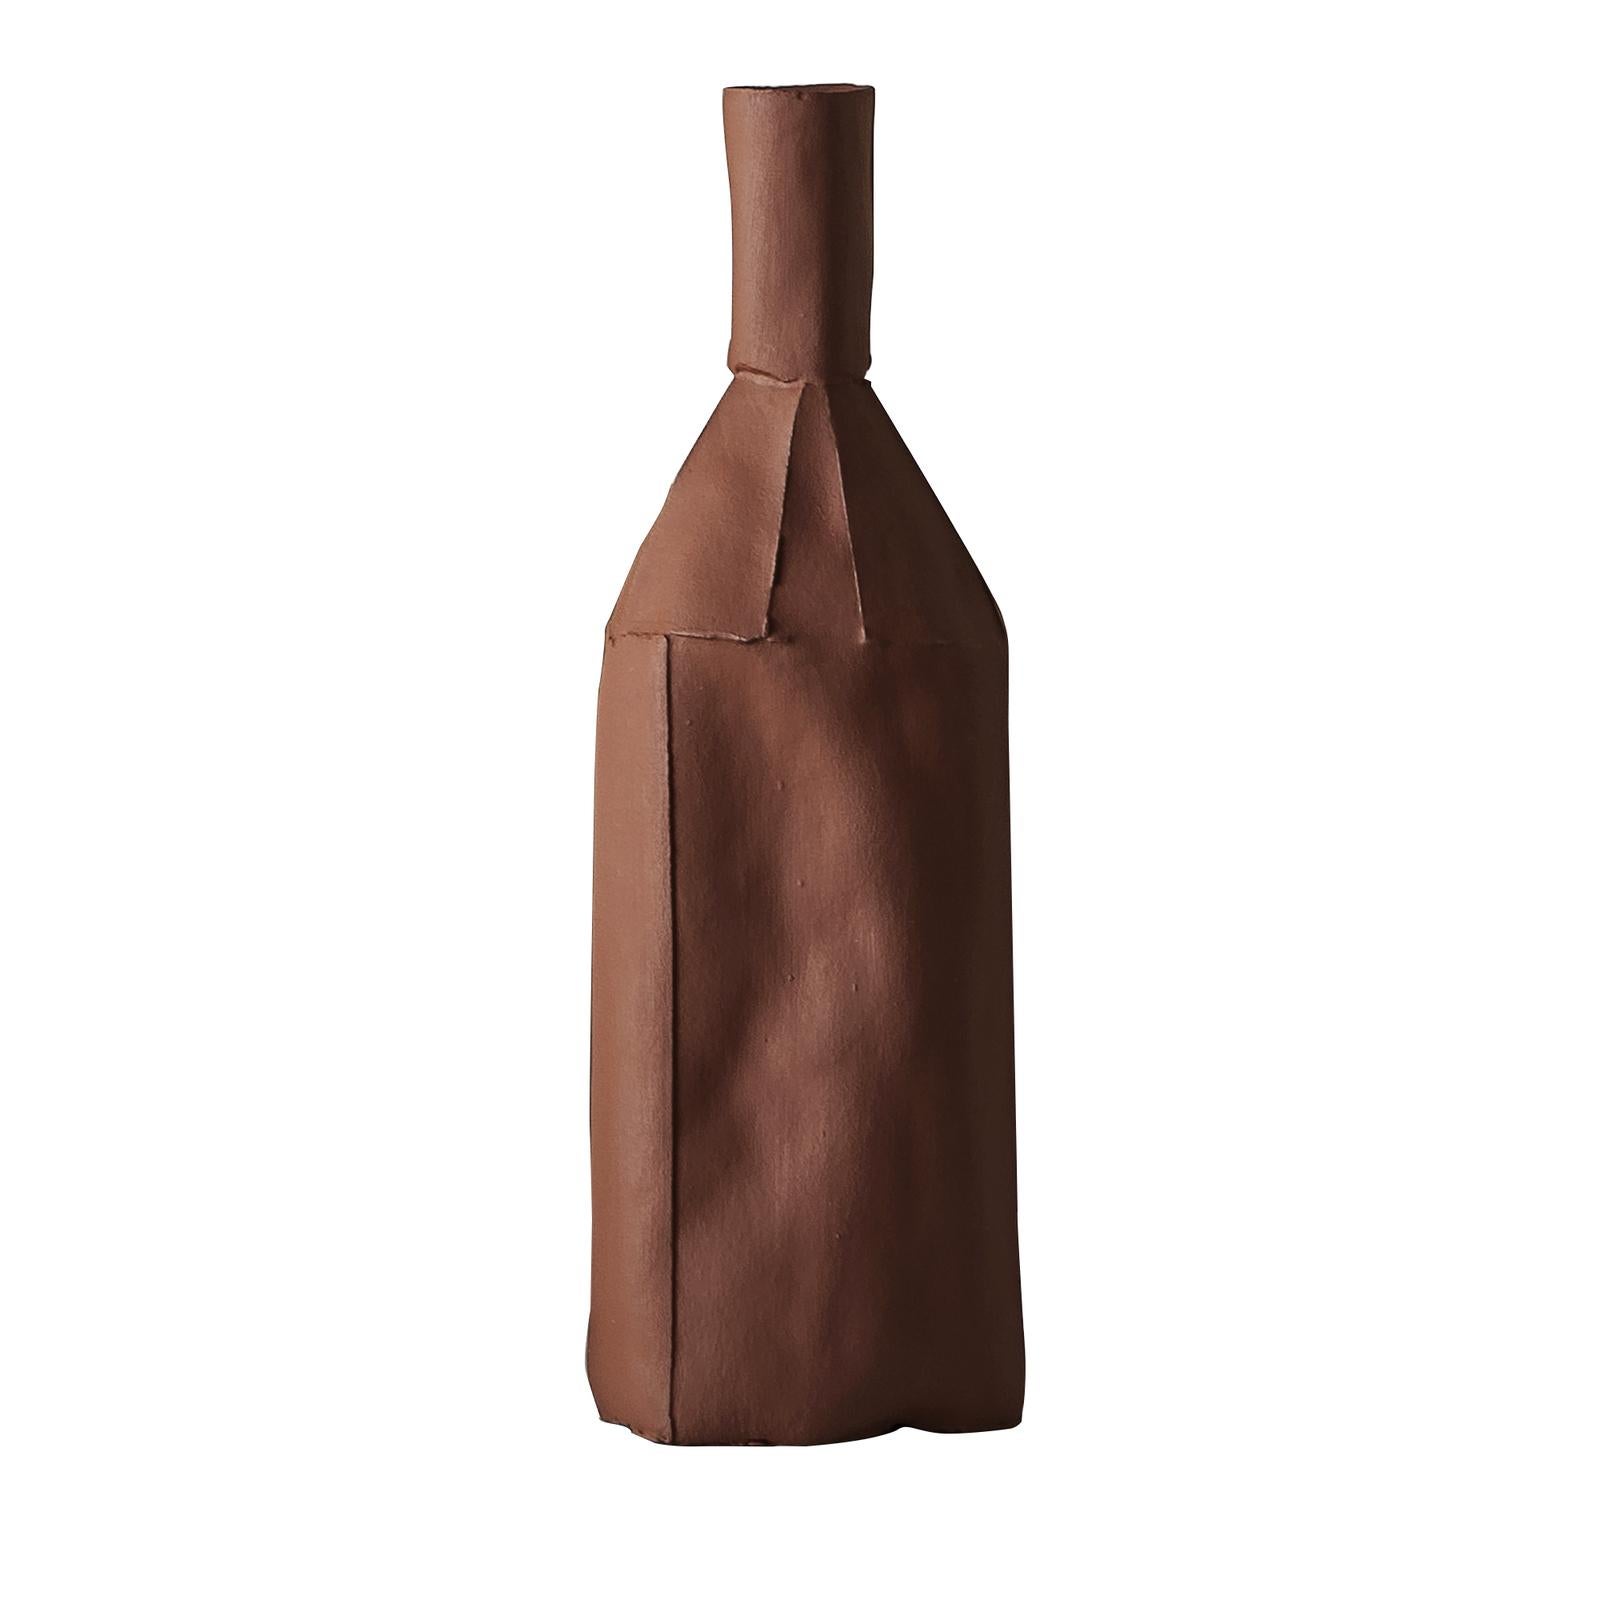 Contemporary Ceramic Cartocci Liscia Texture Maroon Decorative Bottle For Sale